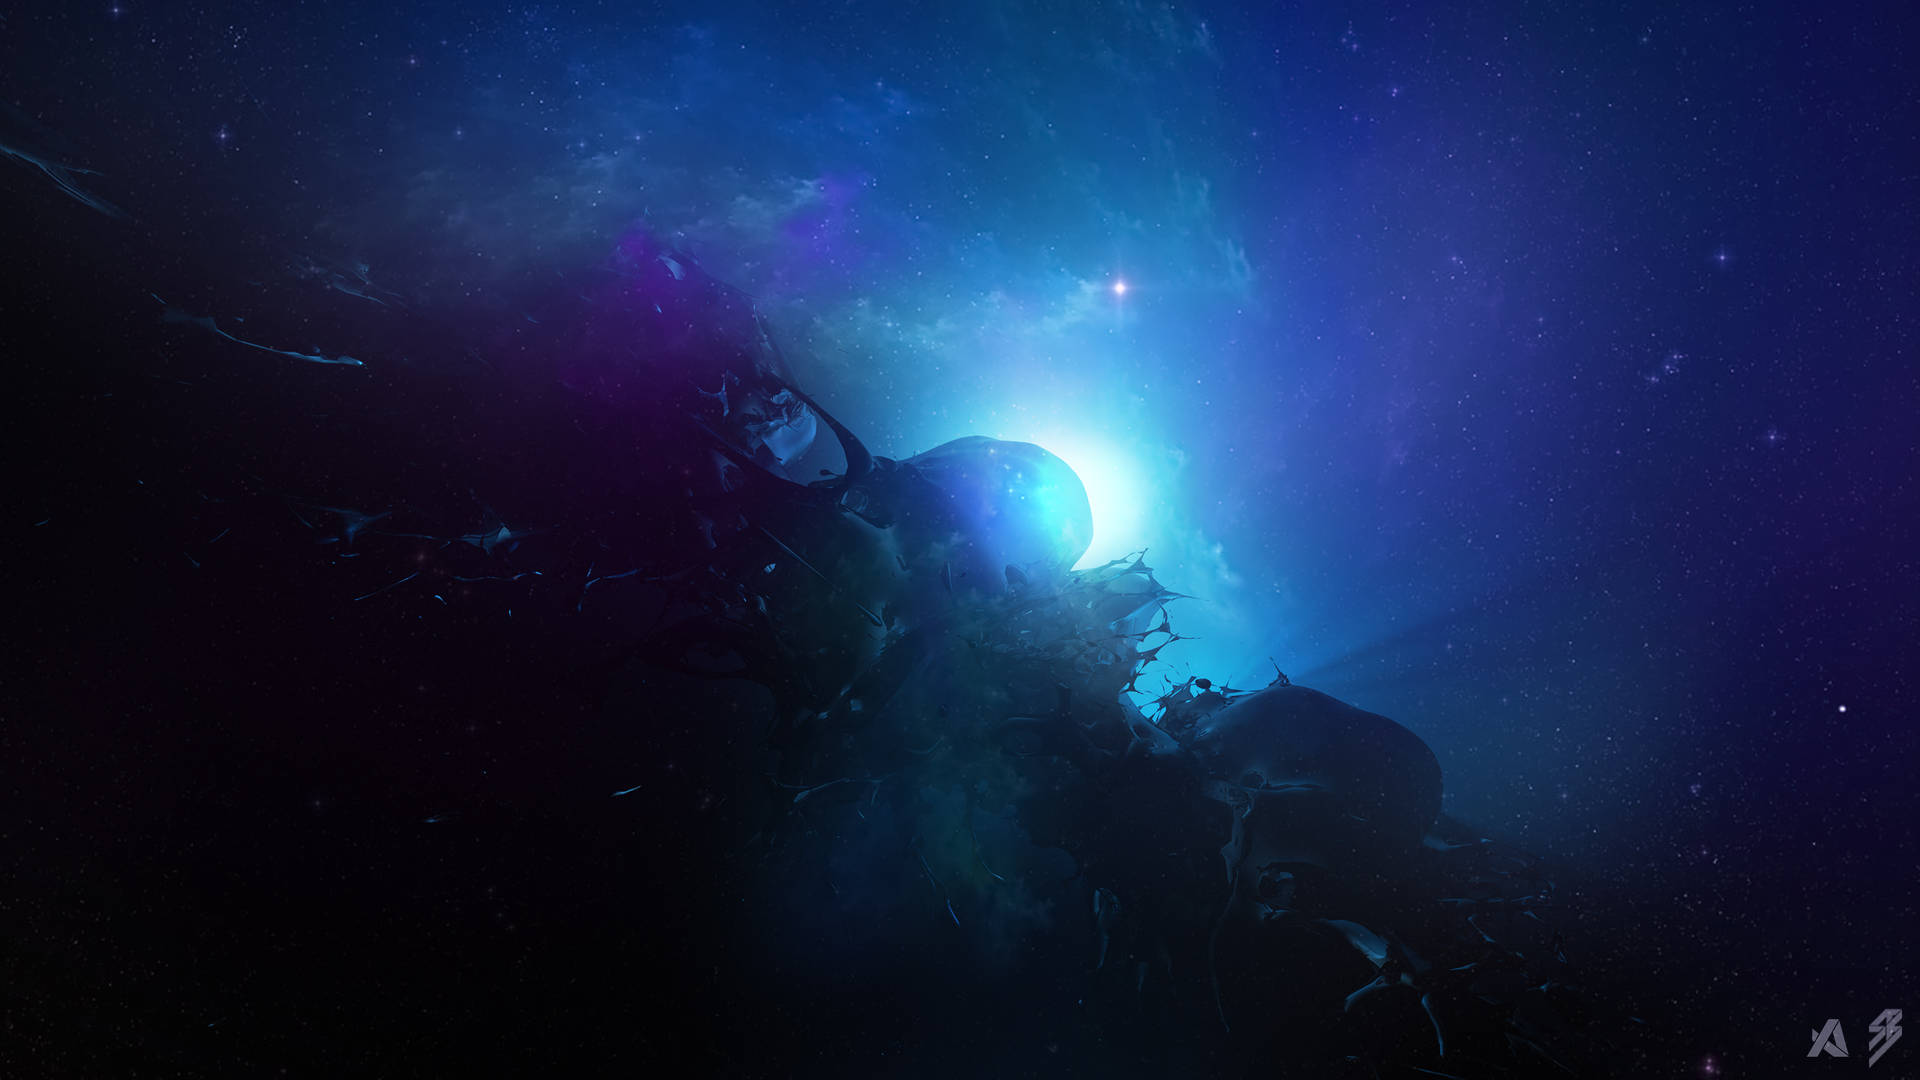 Dark Nebula Blue Space Phone Wallpaper